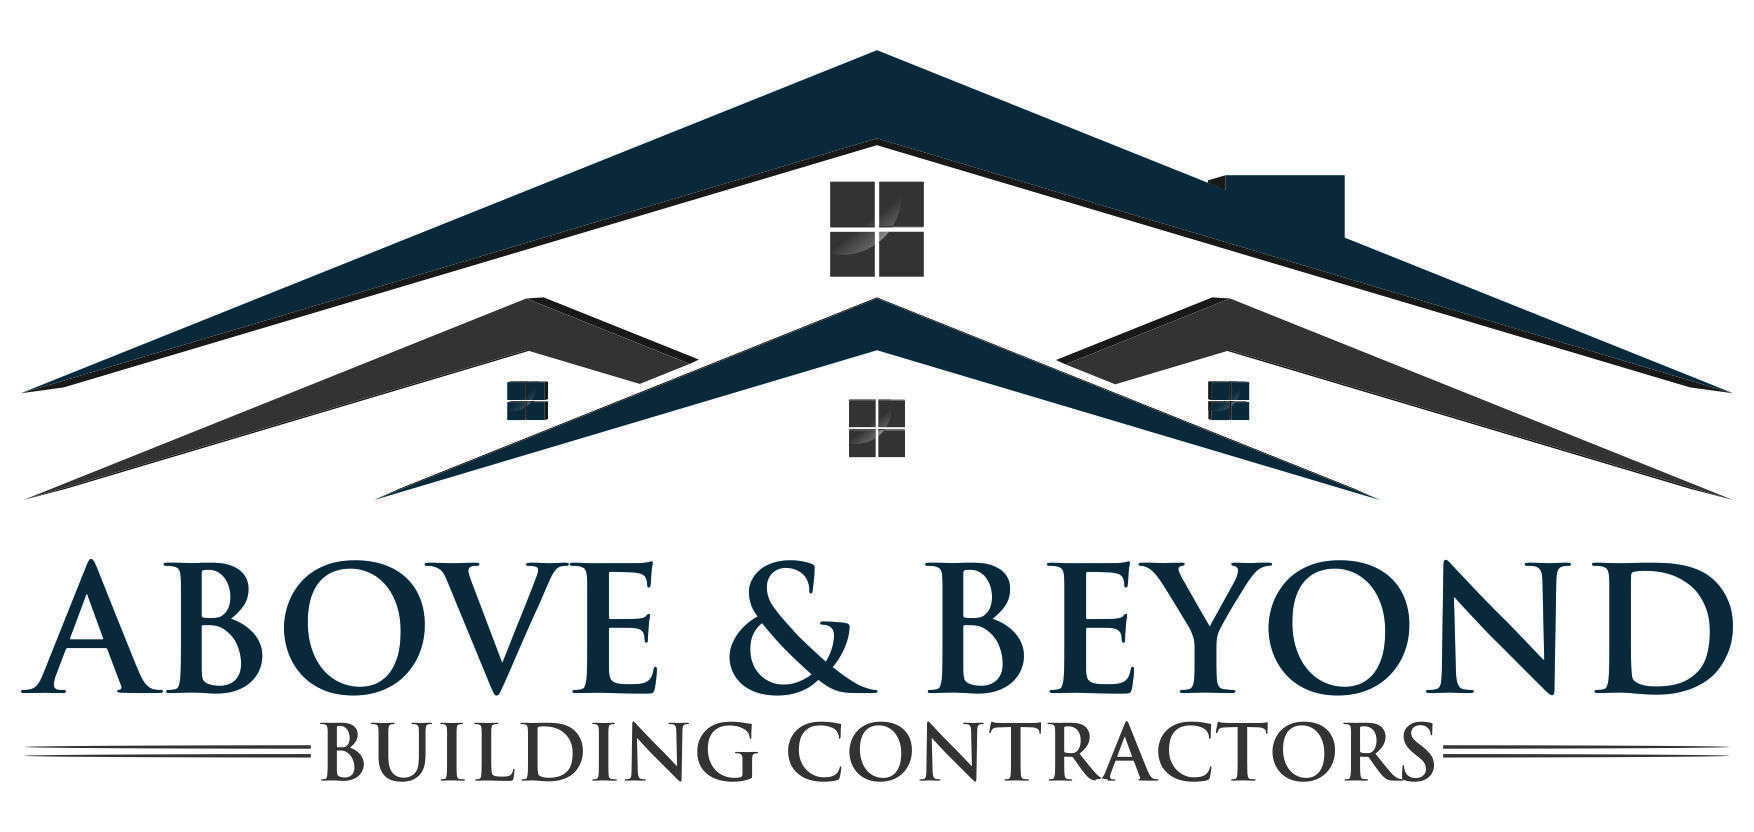 Above & Beyond Building Contractors Logo